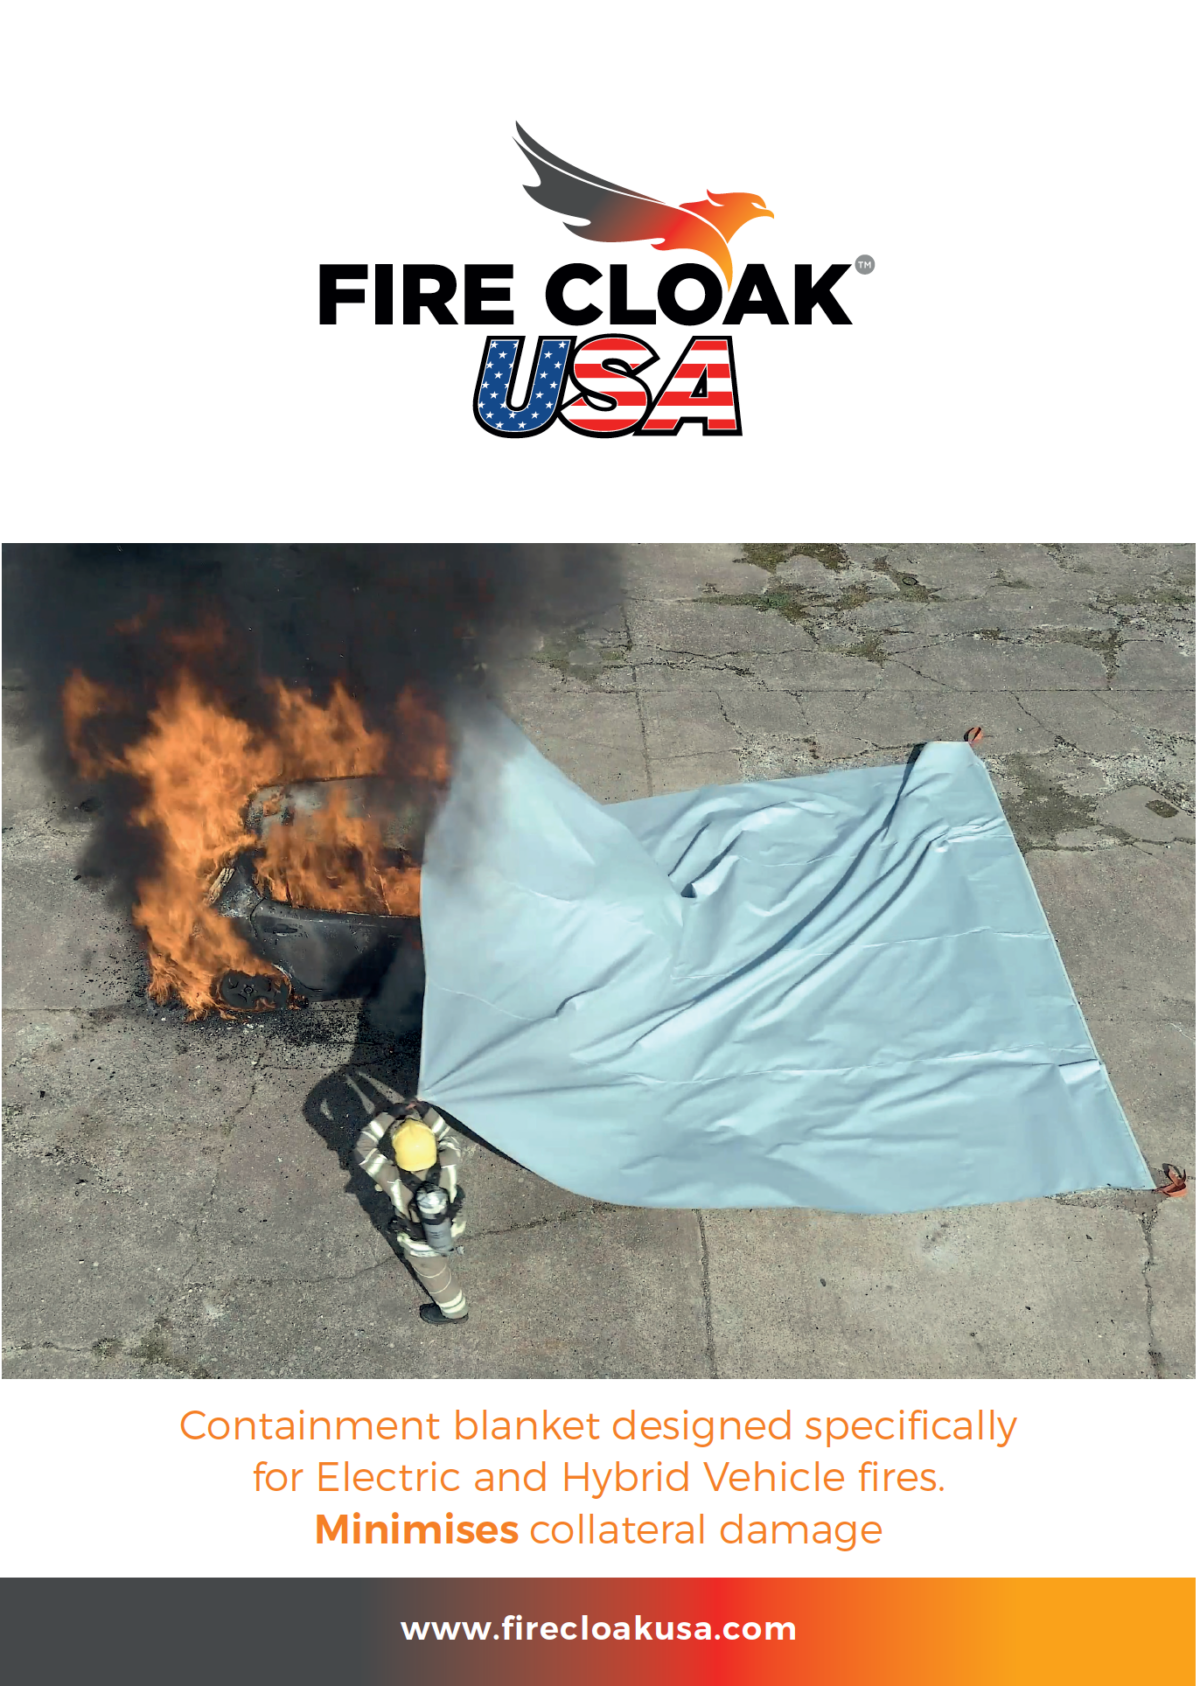 Electric Vehicle Fire Blanket brochure download – Fire Cloak USA